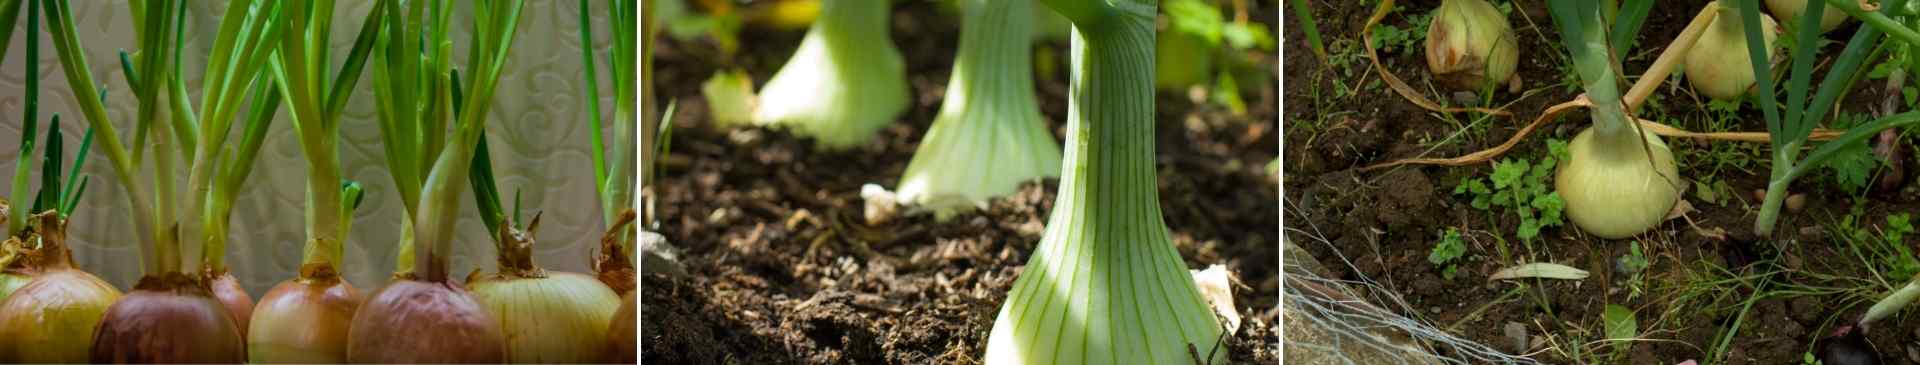 Let’s Explore the Onion (Allium) Family!